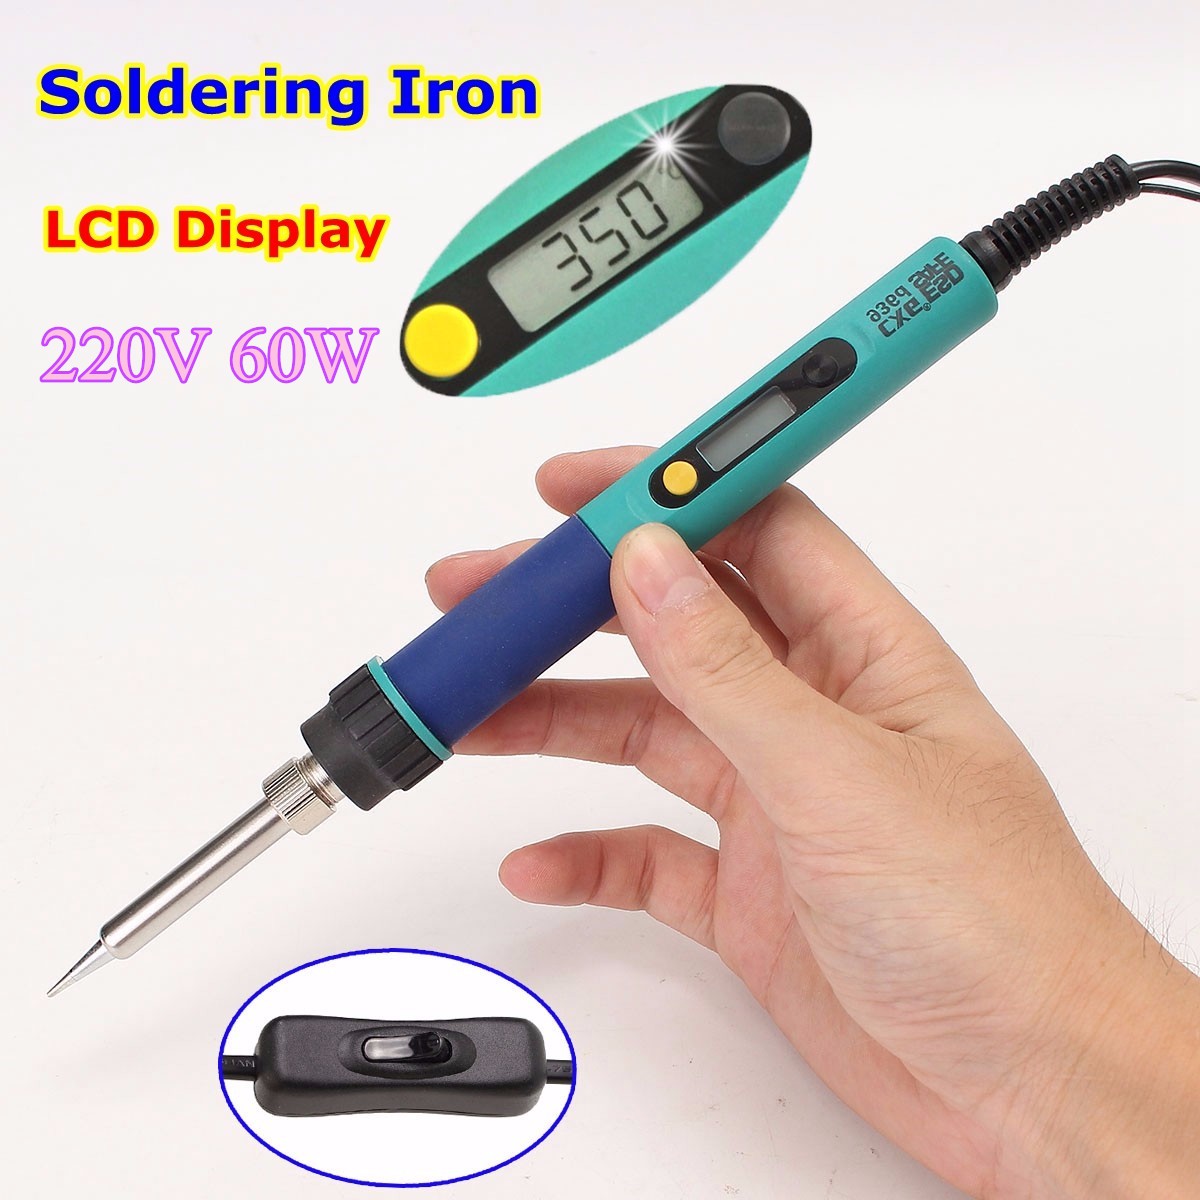 Digital-220V-60W--Adjustable-Temperature-80-450degC-LCD-Display-Soldering-Iron-1102661-1